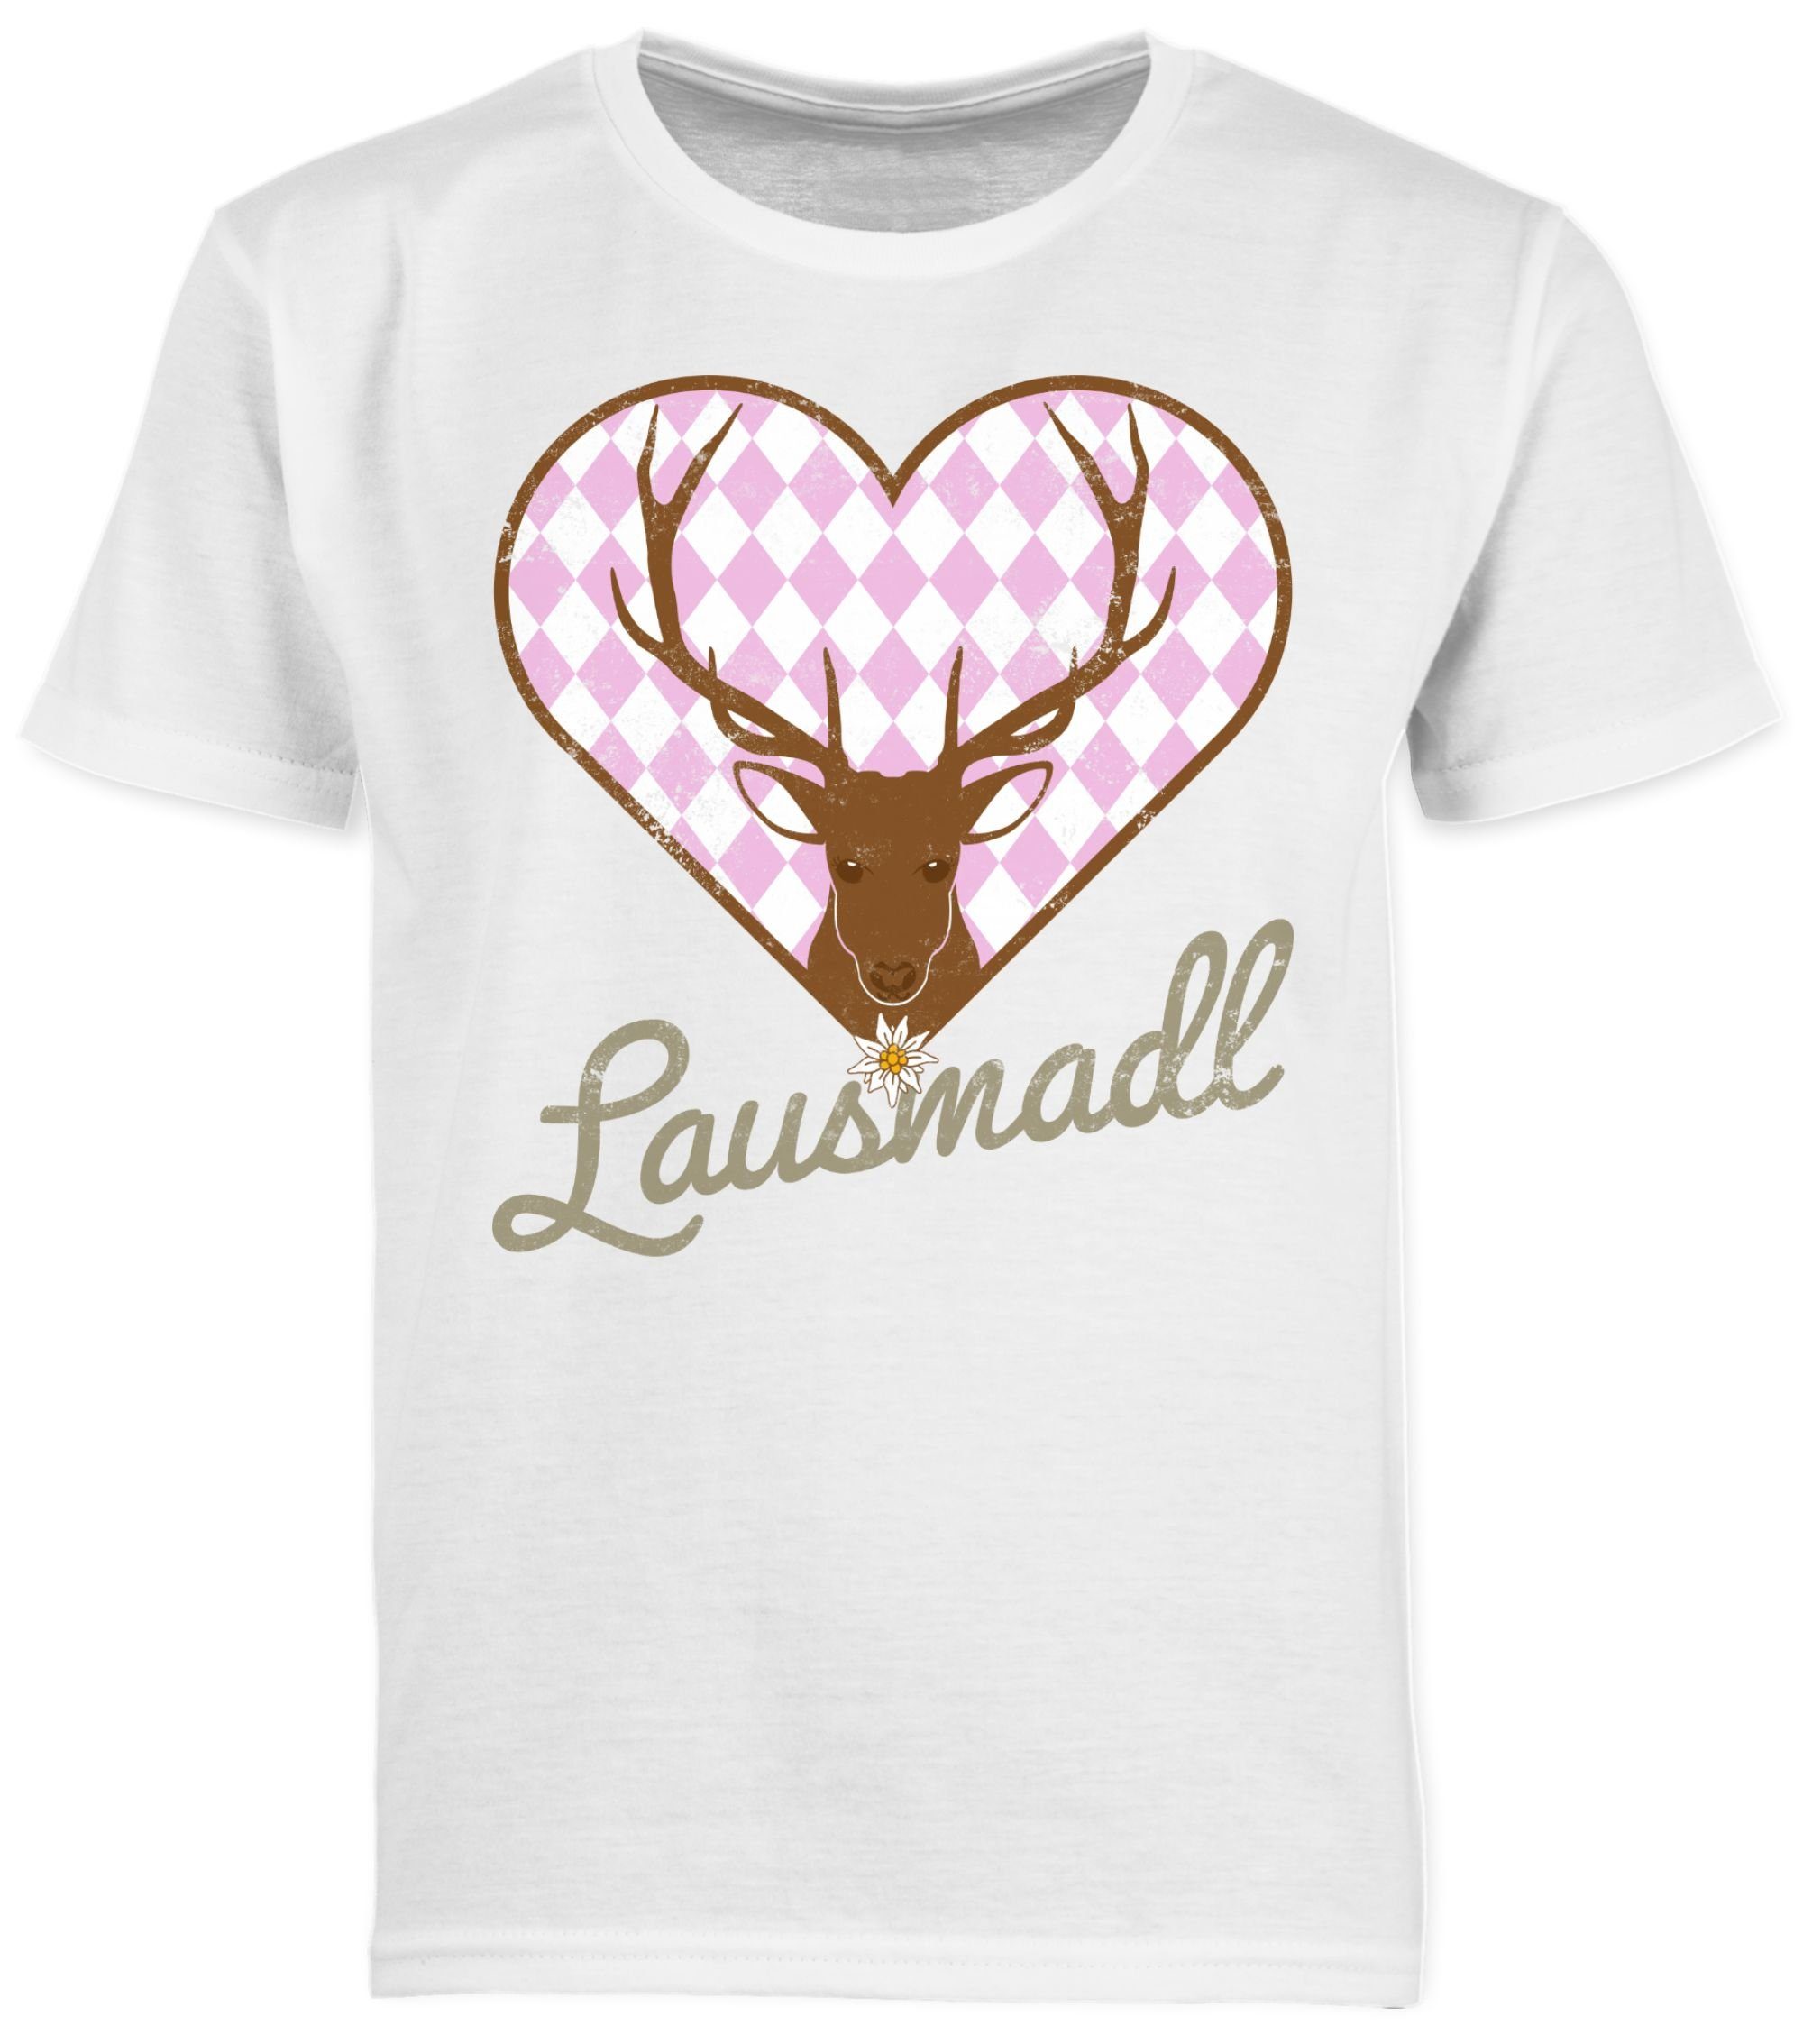 für Lausmadl Shirtracer Mode Oktoberfest Weiß Hirsch Outfit 2 Kinder T-Shirt